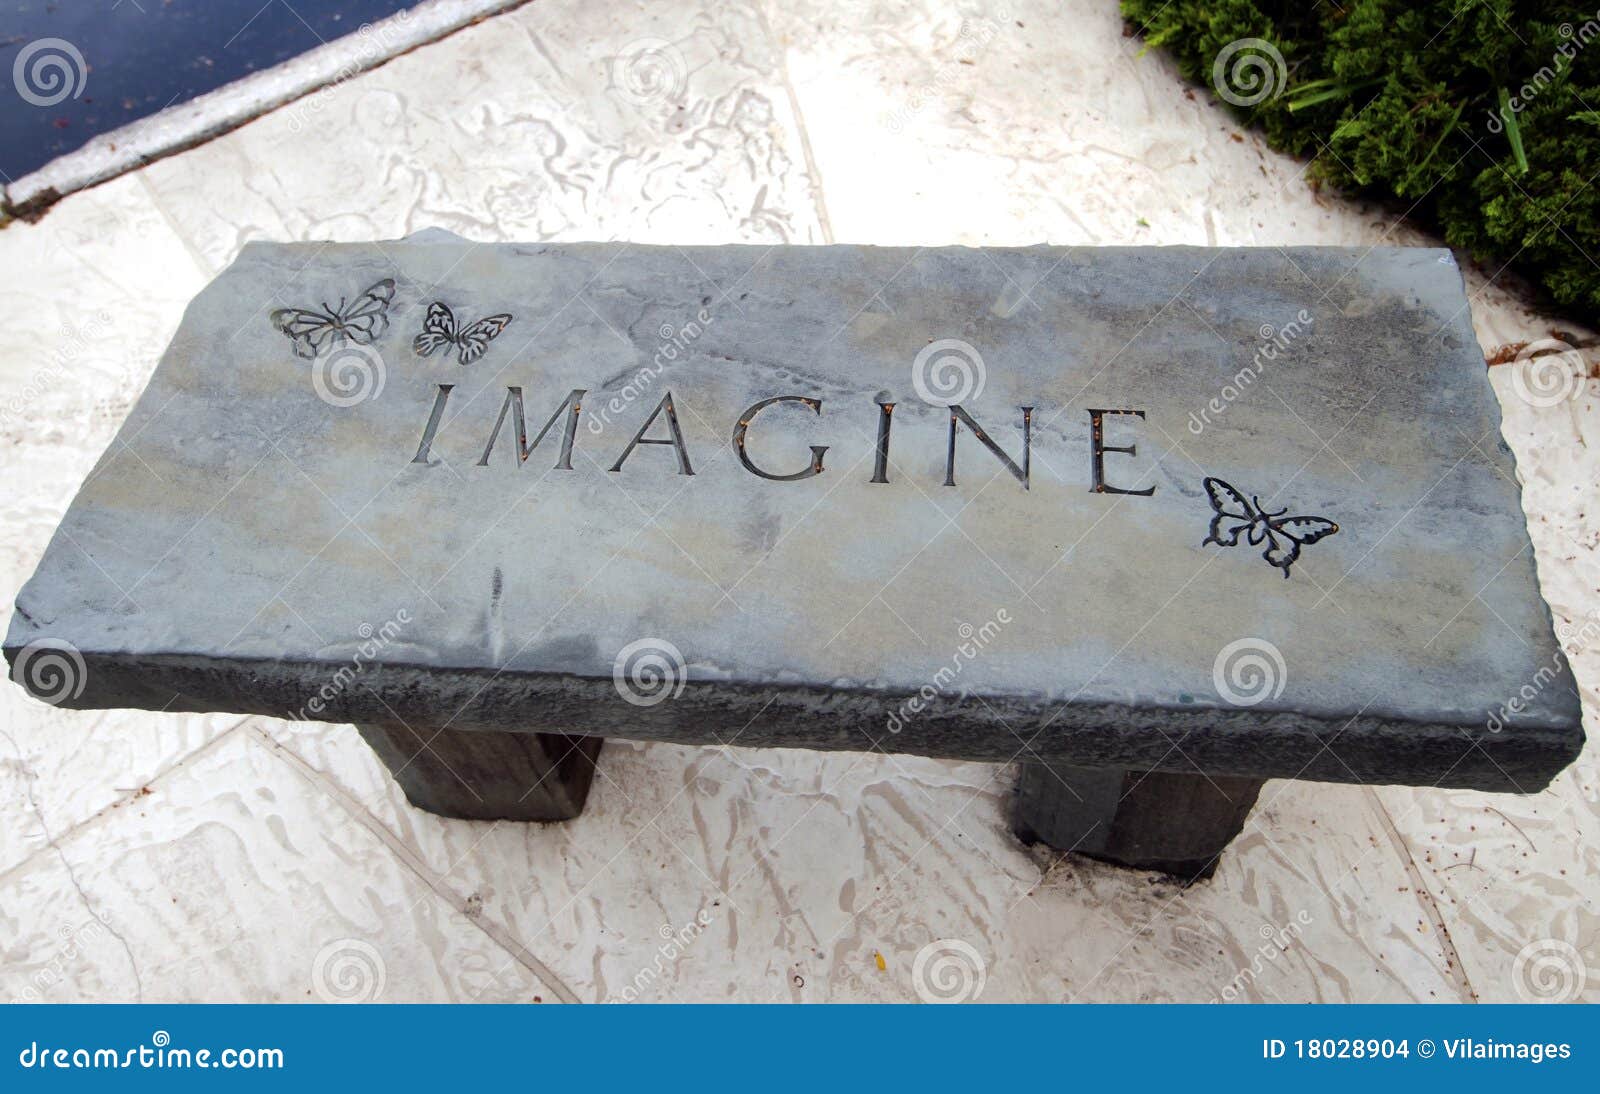 imagine concrete bench engraving.